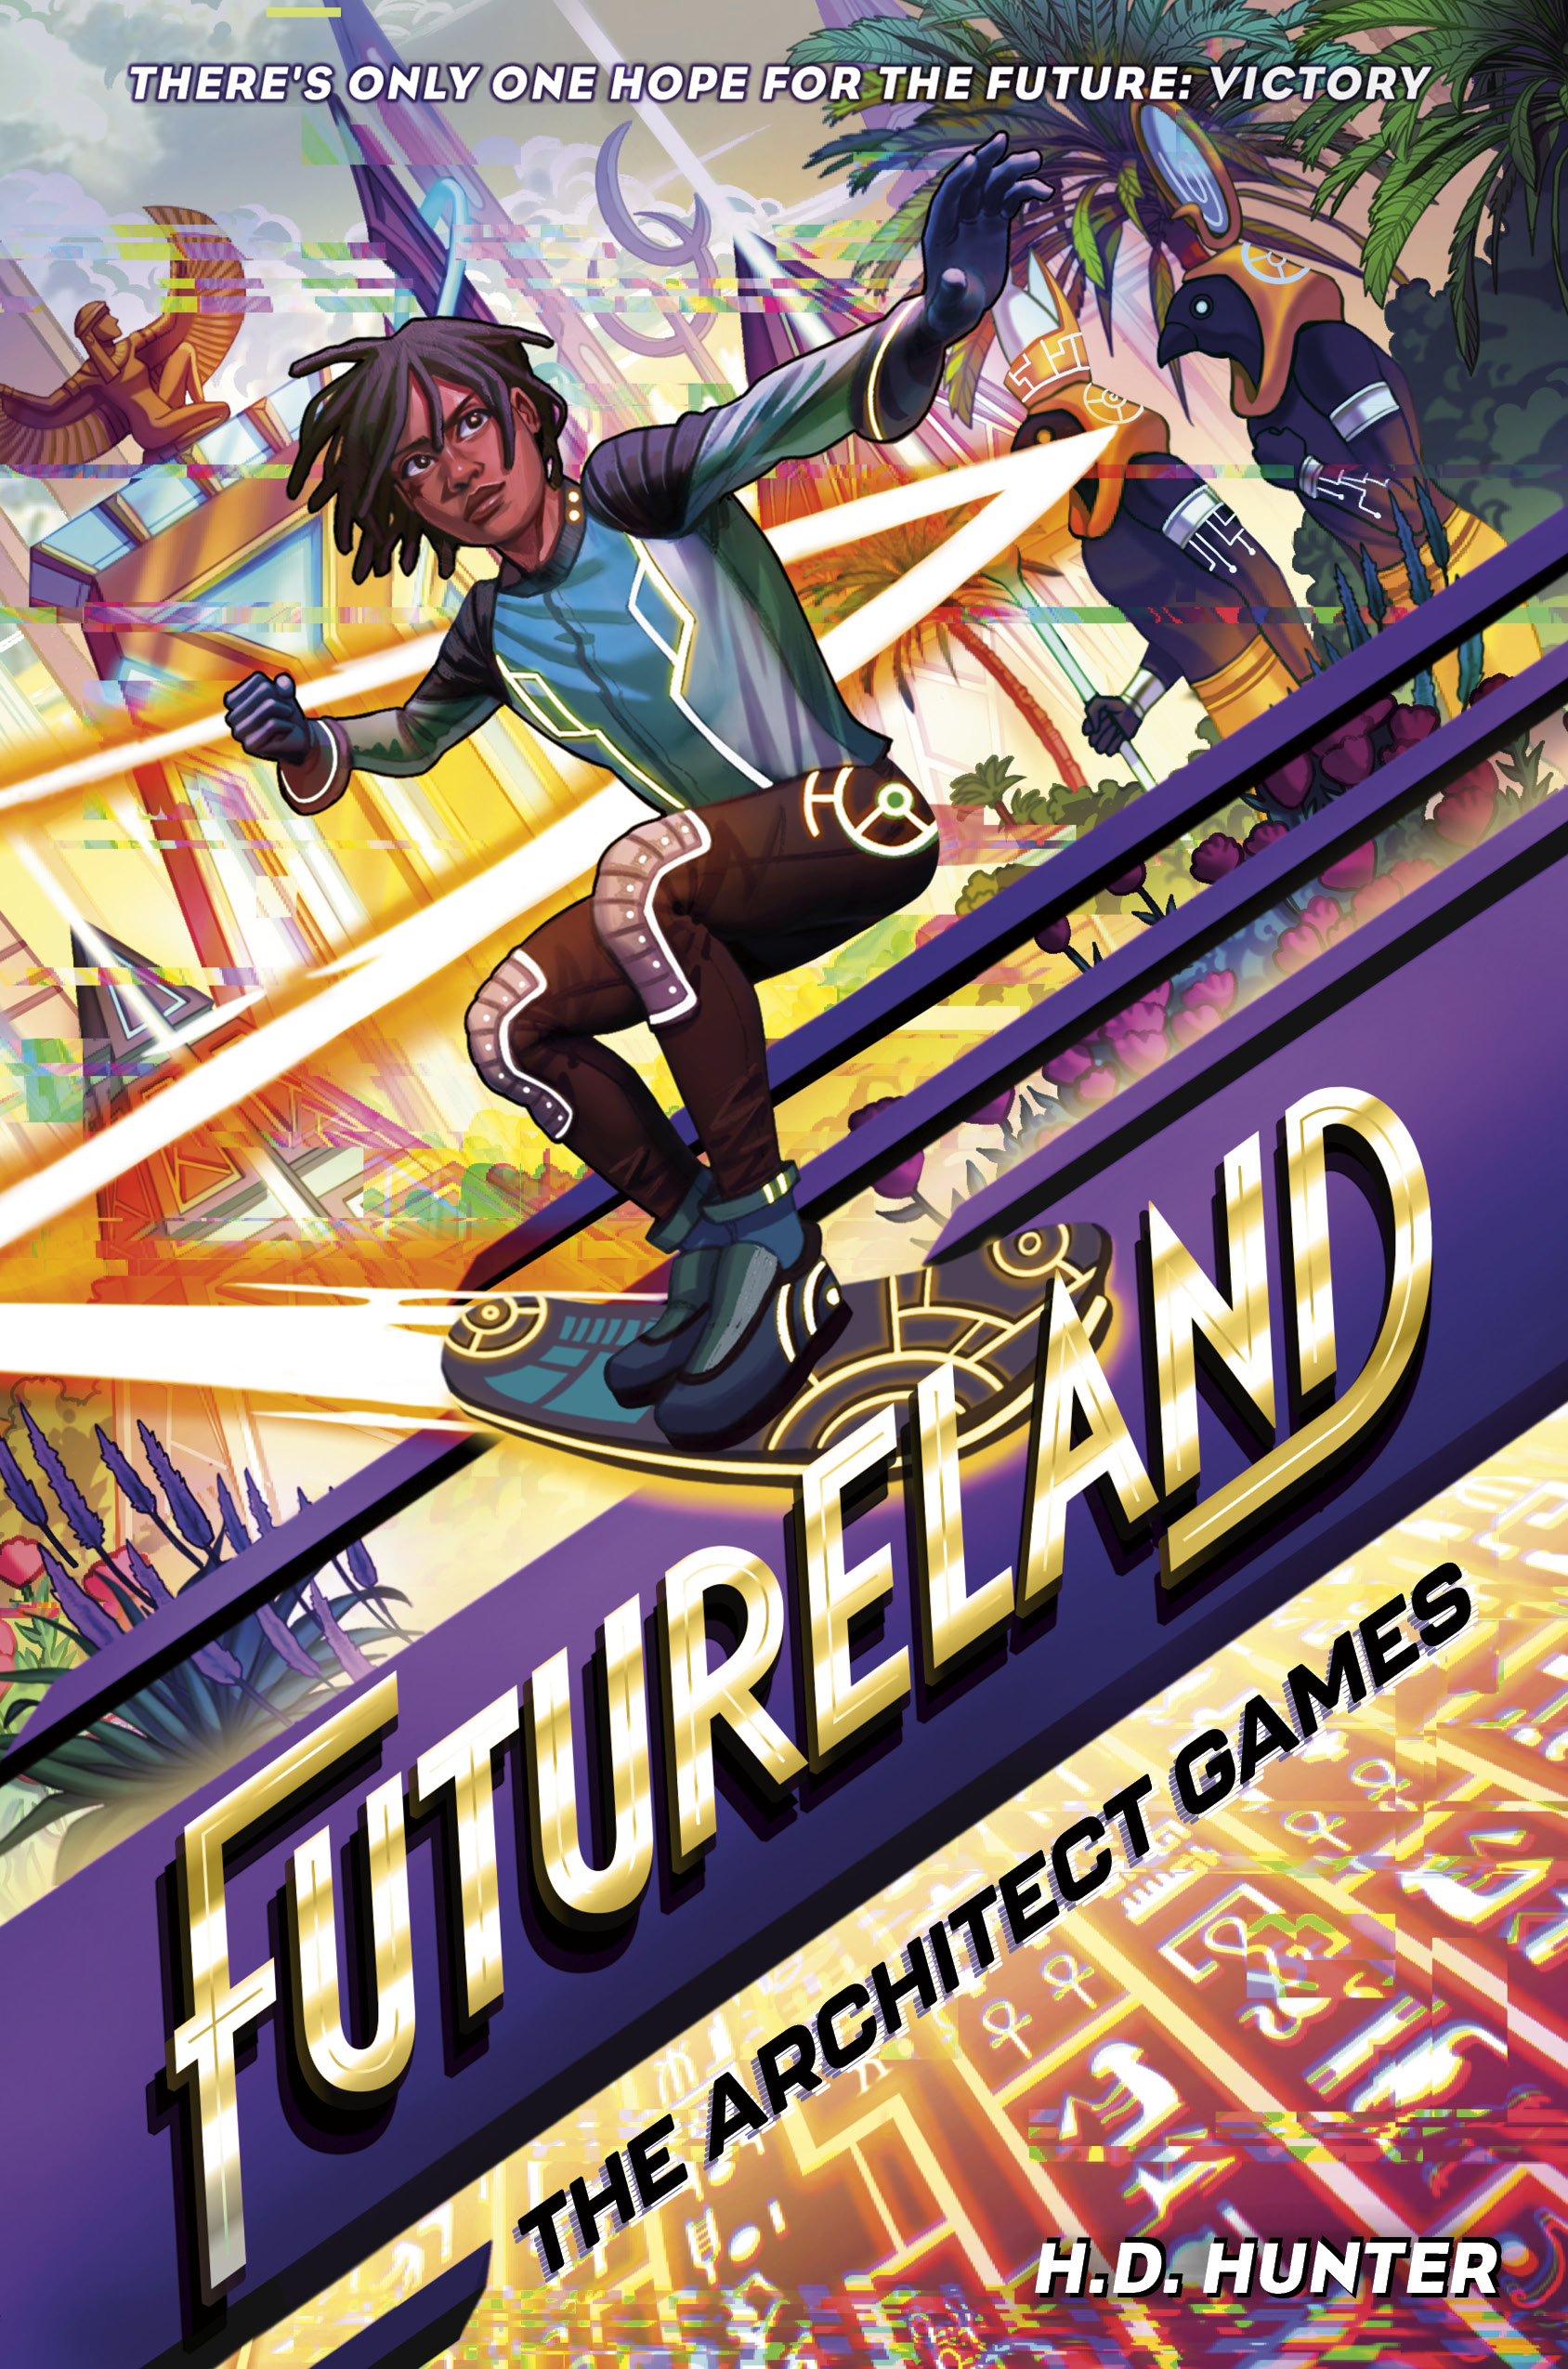 Futureland: The Architect Games